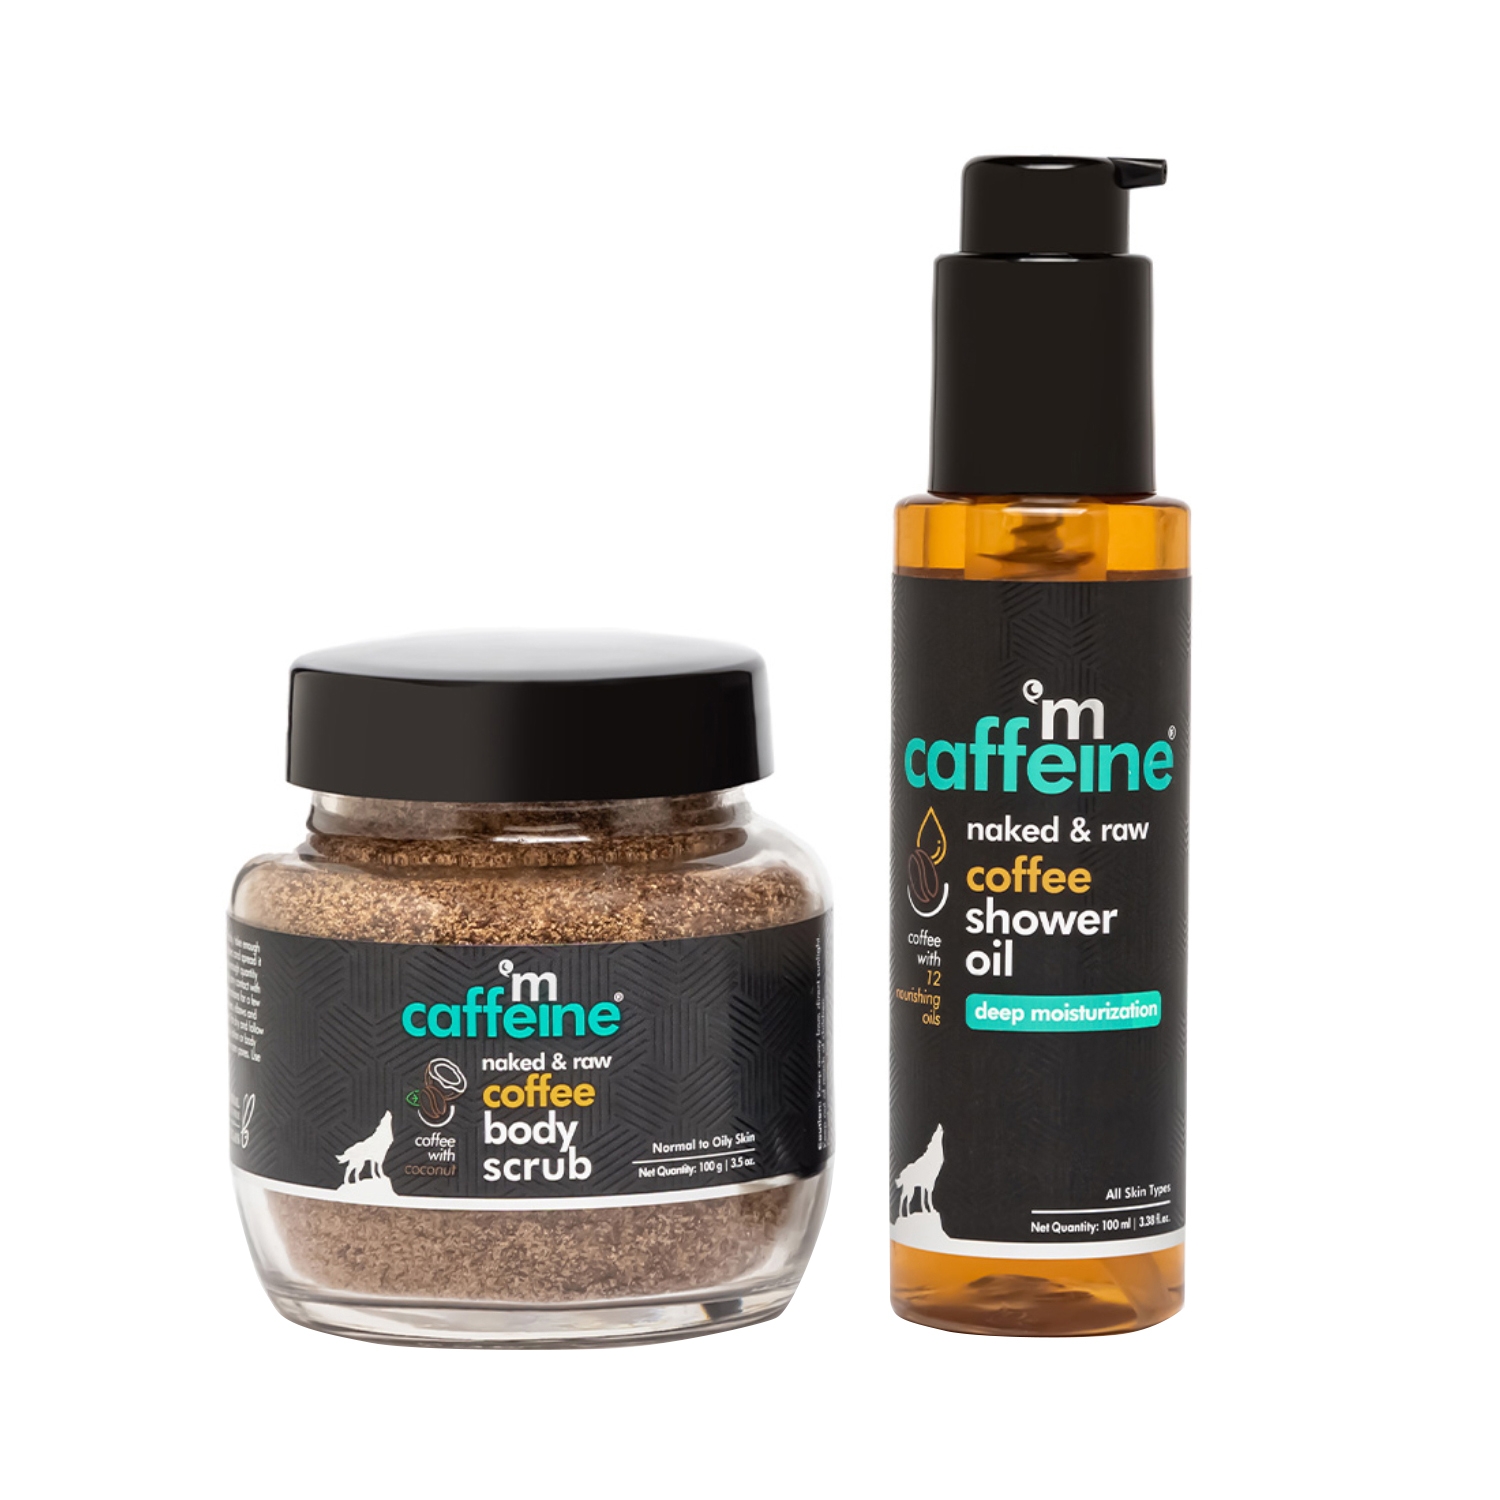 mCaffeine | mCaffeine Naked & Raw Coffee Shower Oil And Naked & Raw Coffee Body Scrub - (2Pcs)